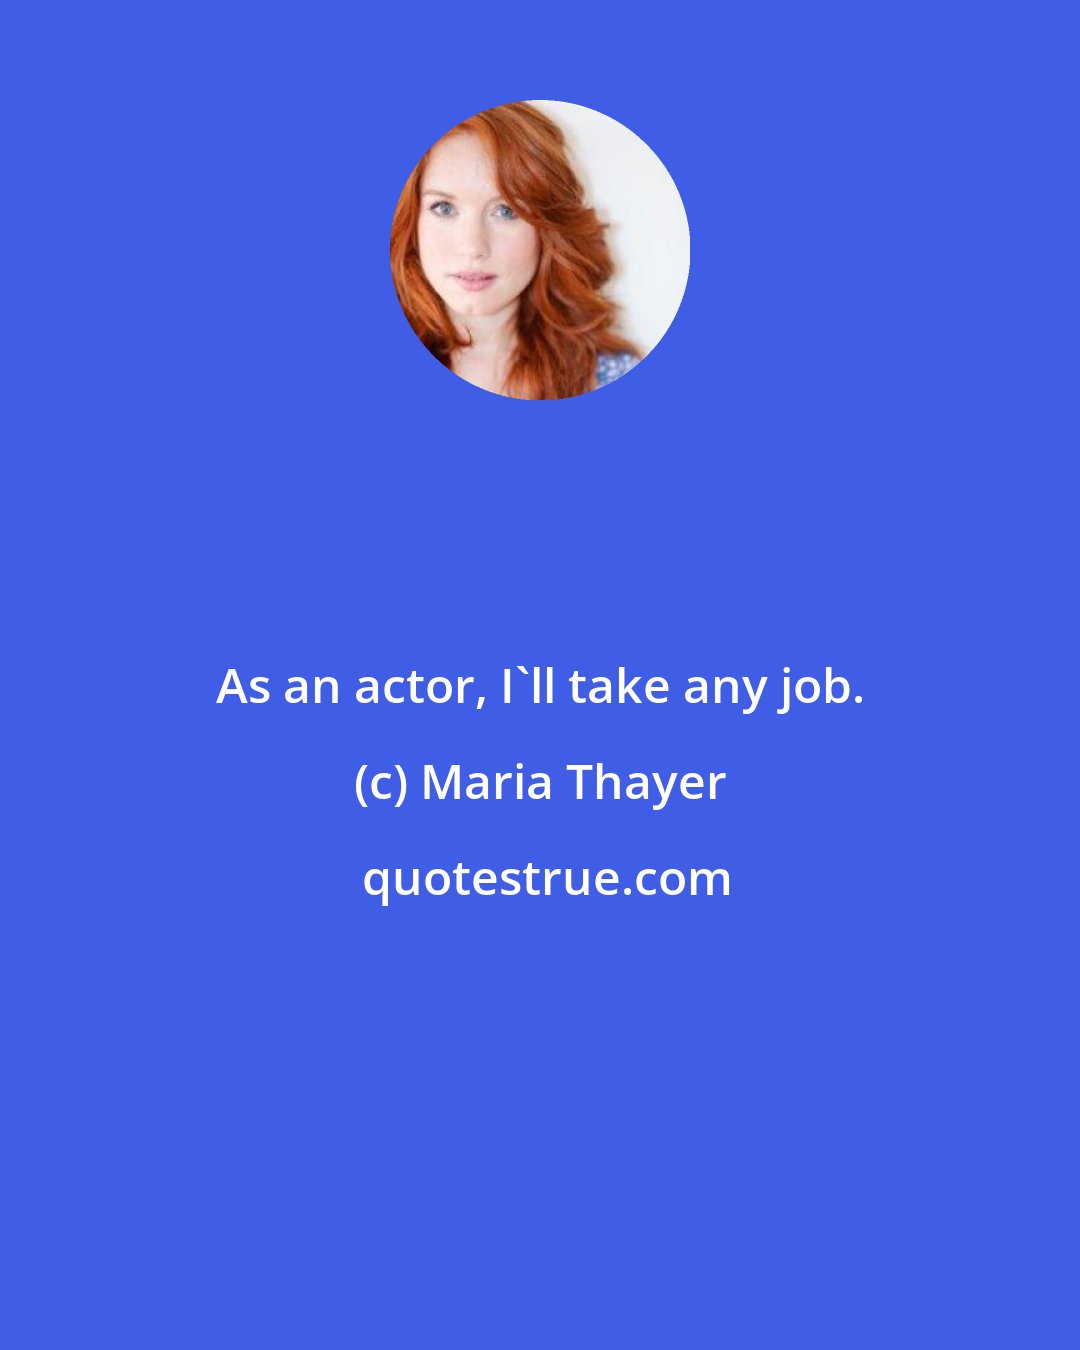 Maria Thayer: As an actor, I'll take any job.